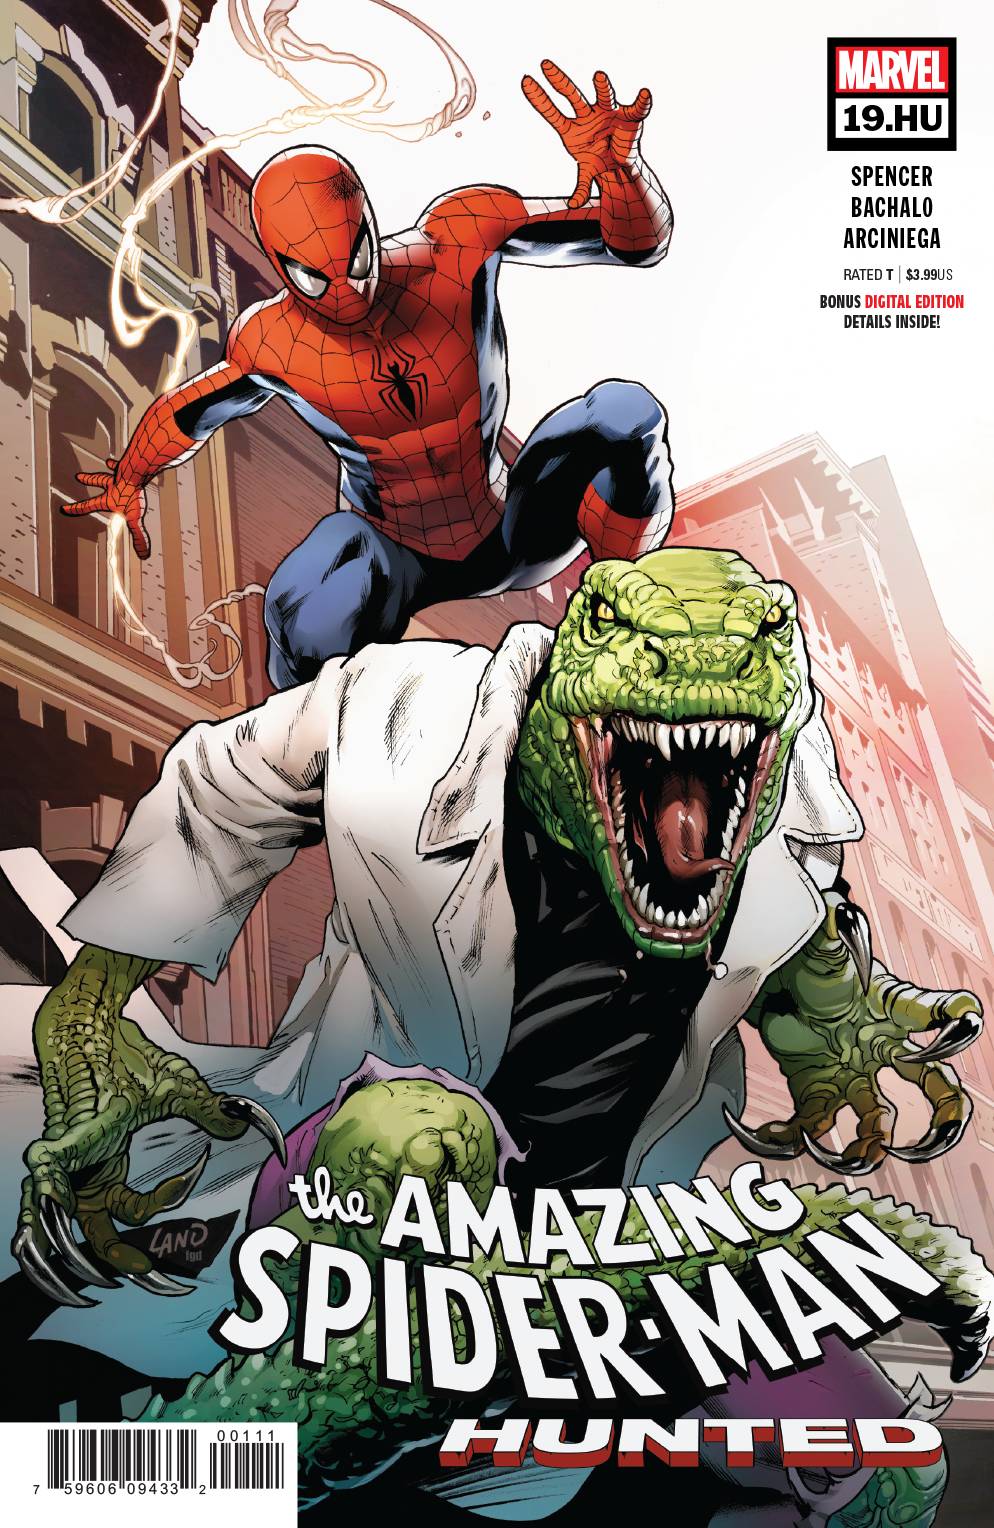 Amazing Spider-Man #19.hu (2018)